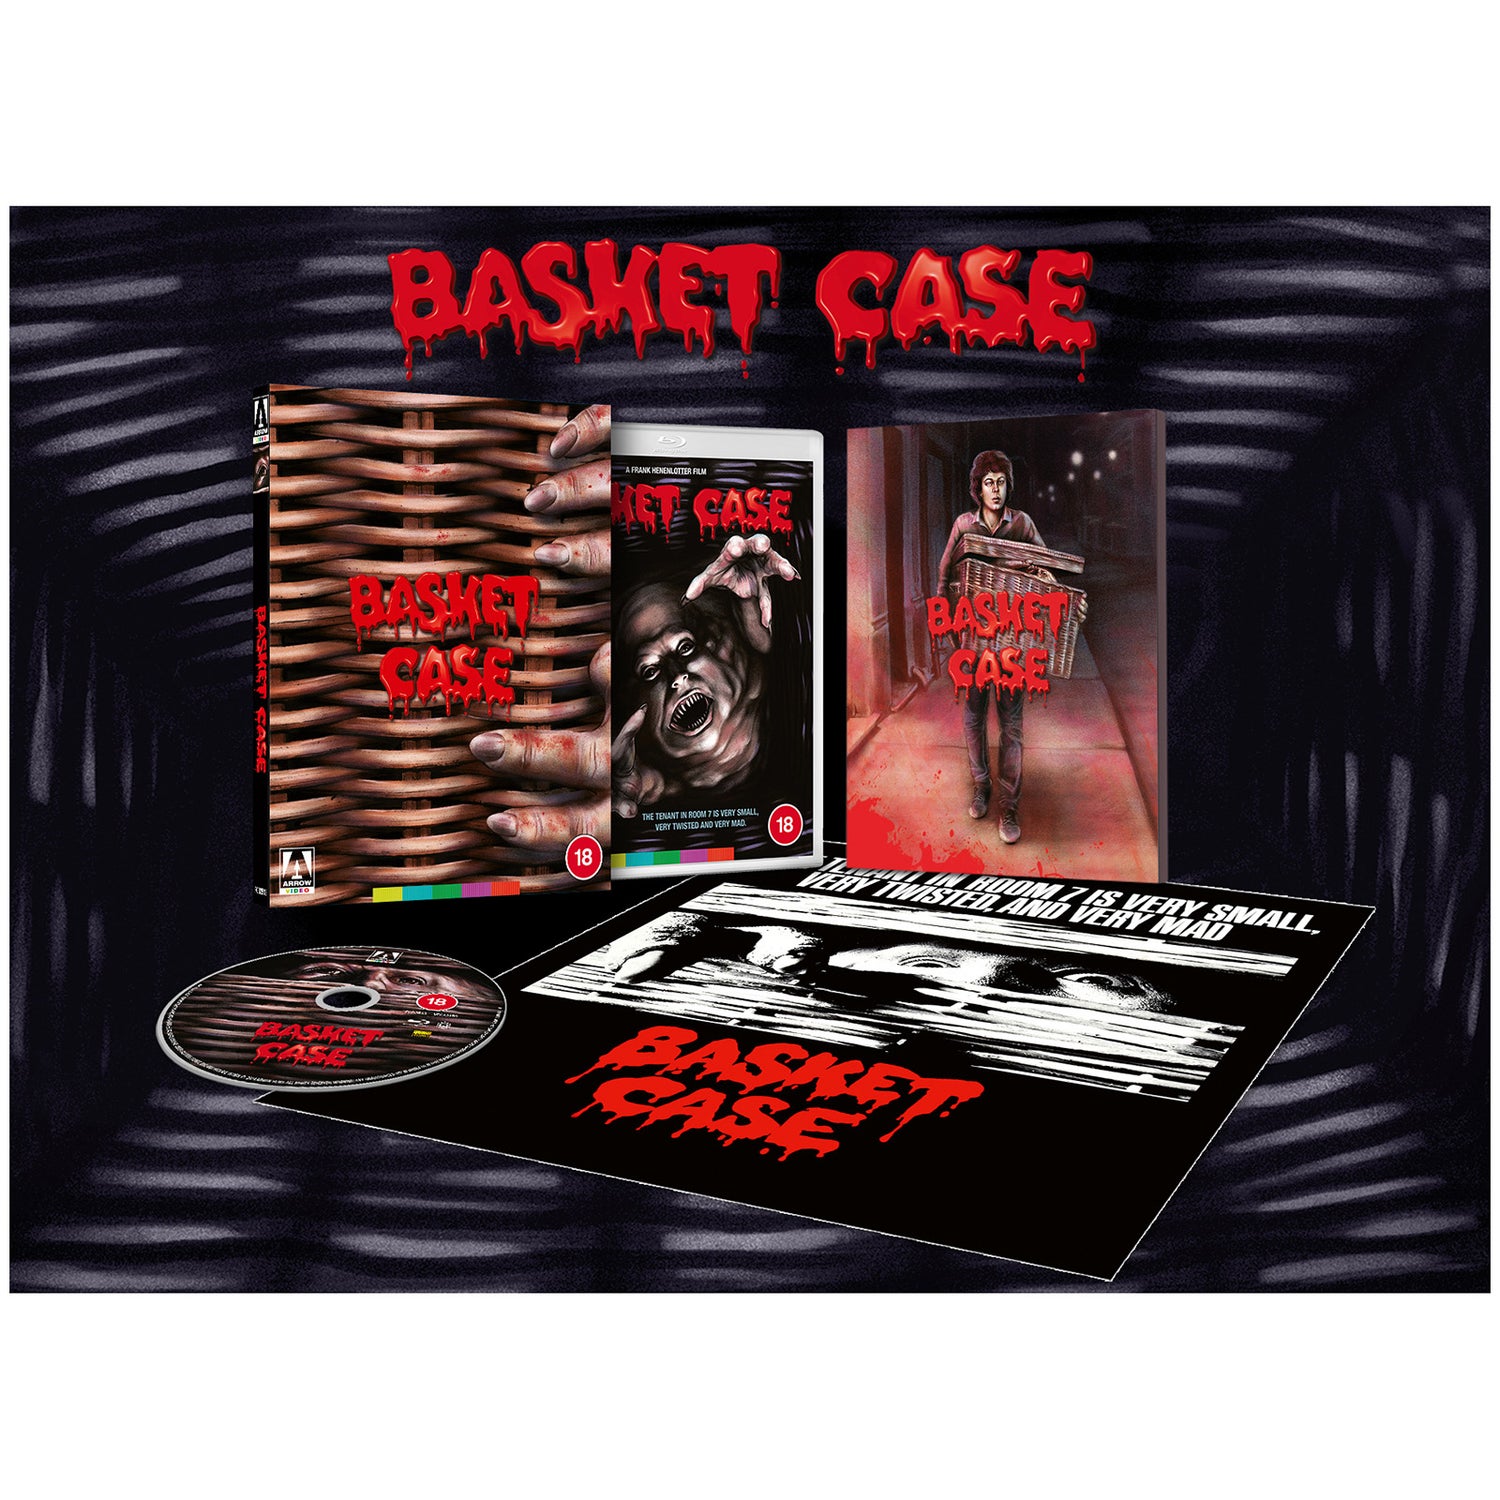 Basket Case Limited Edition Blu-ray